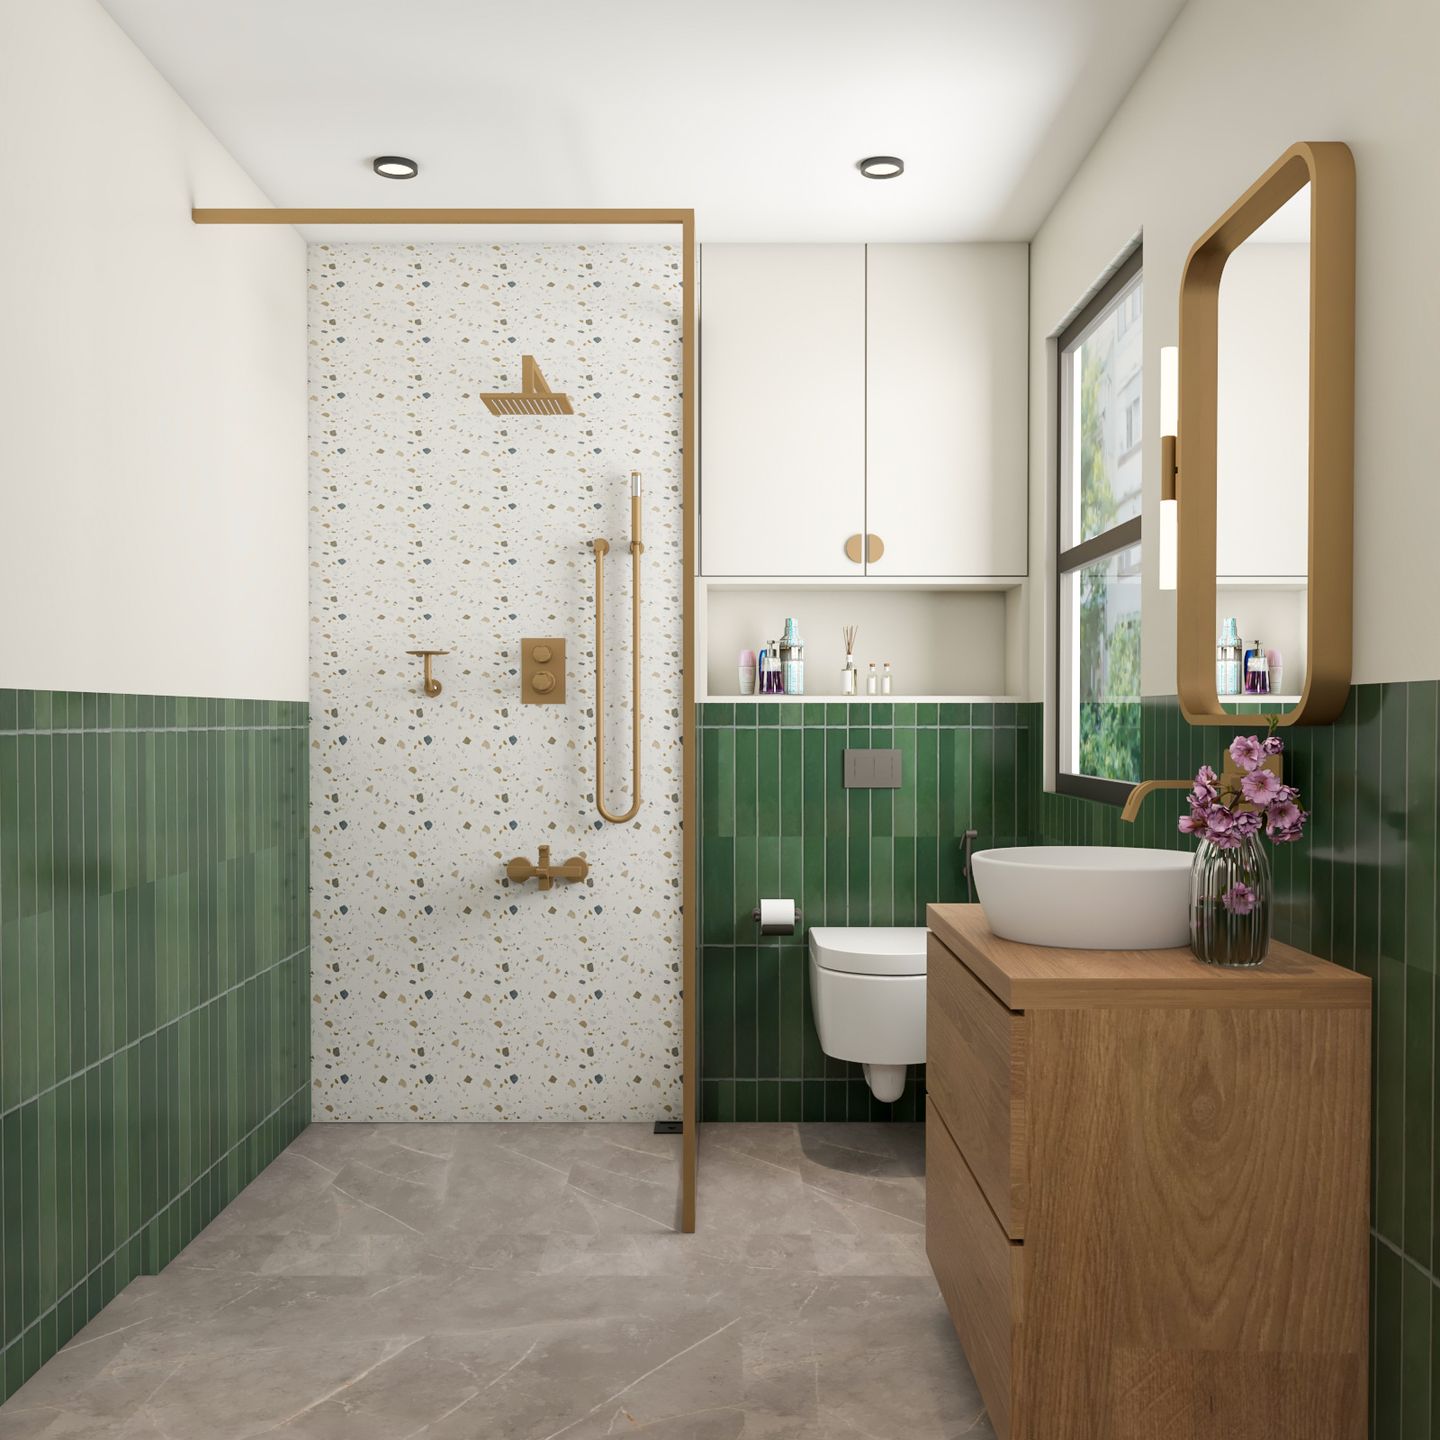 Bathroom Design With Wooden Vanity Unit - Livspace